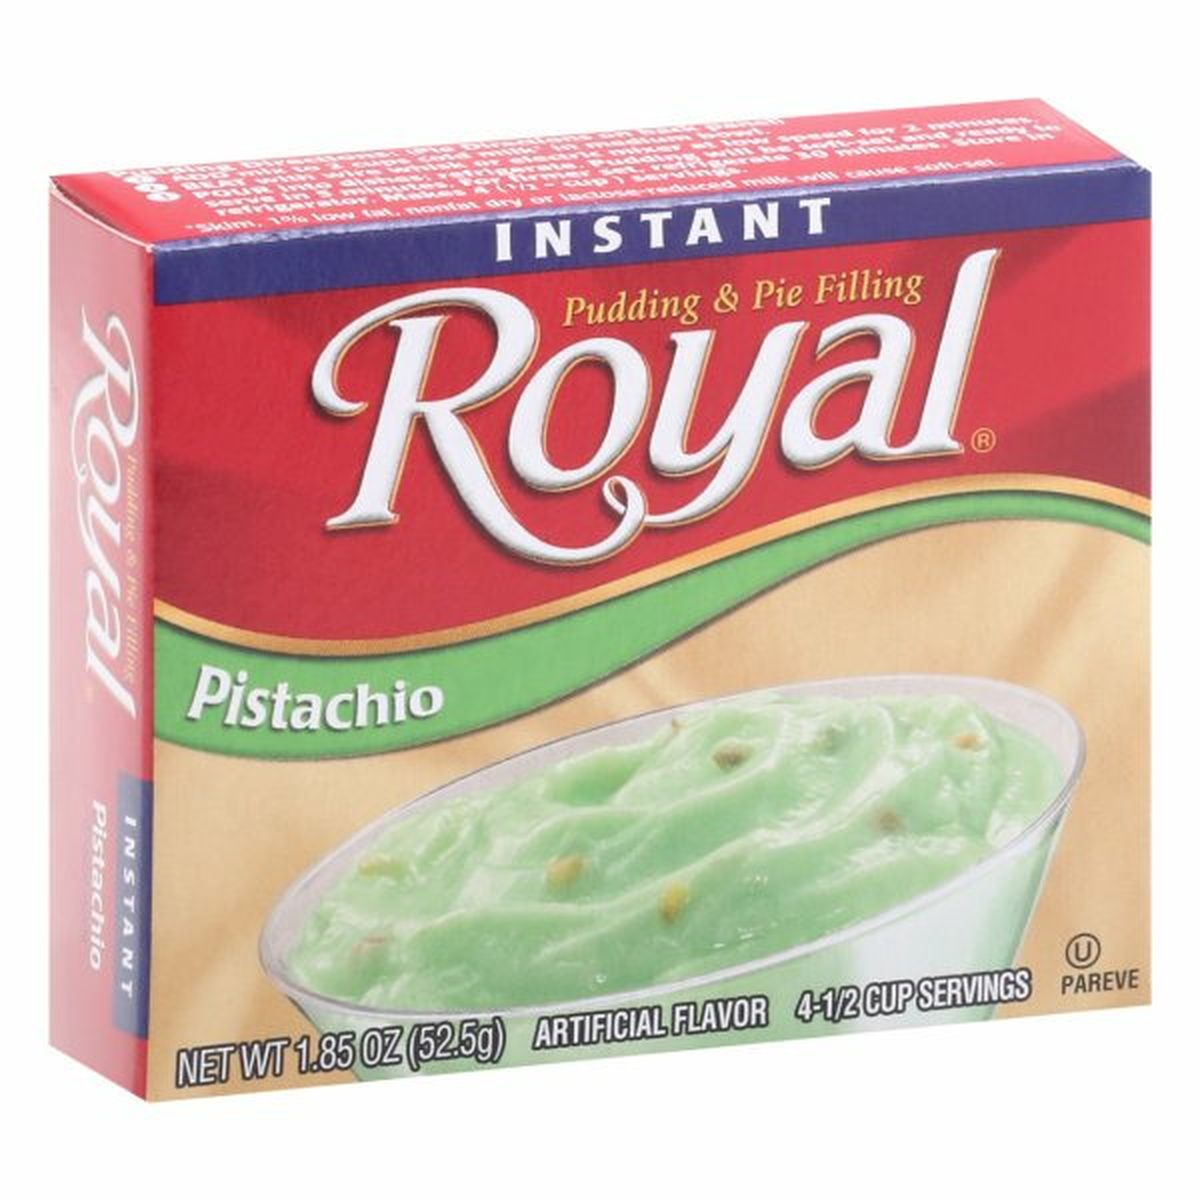 Calories in Royal Pudding & Pie Filling, Pistachio, Instant